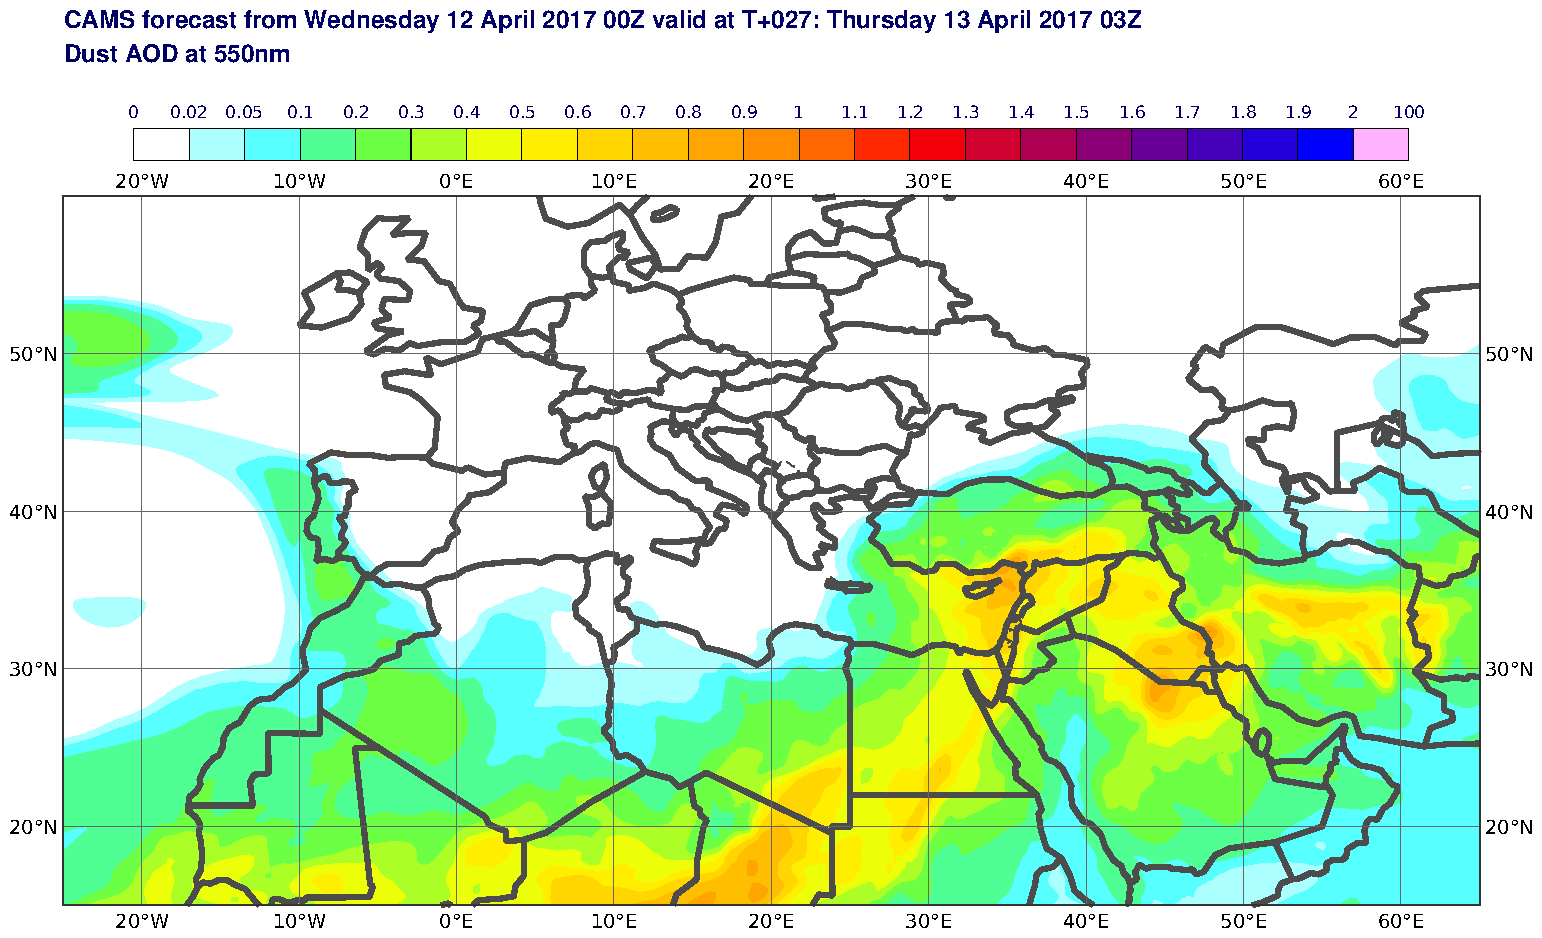 Dust AOD at 550nm valid at T27 - 2017-04-13 03:00